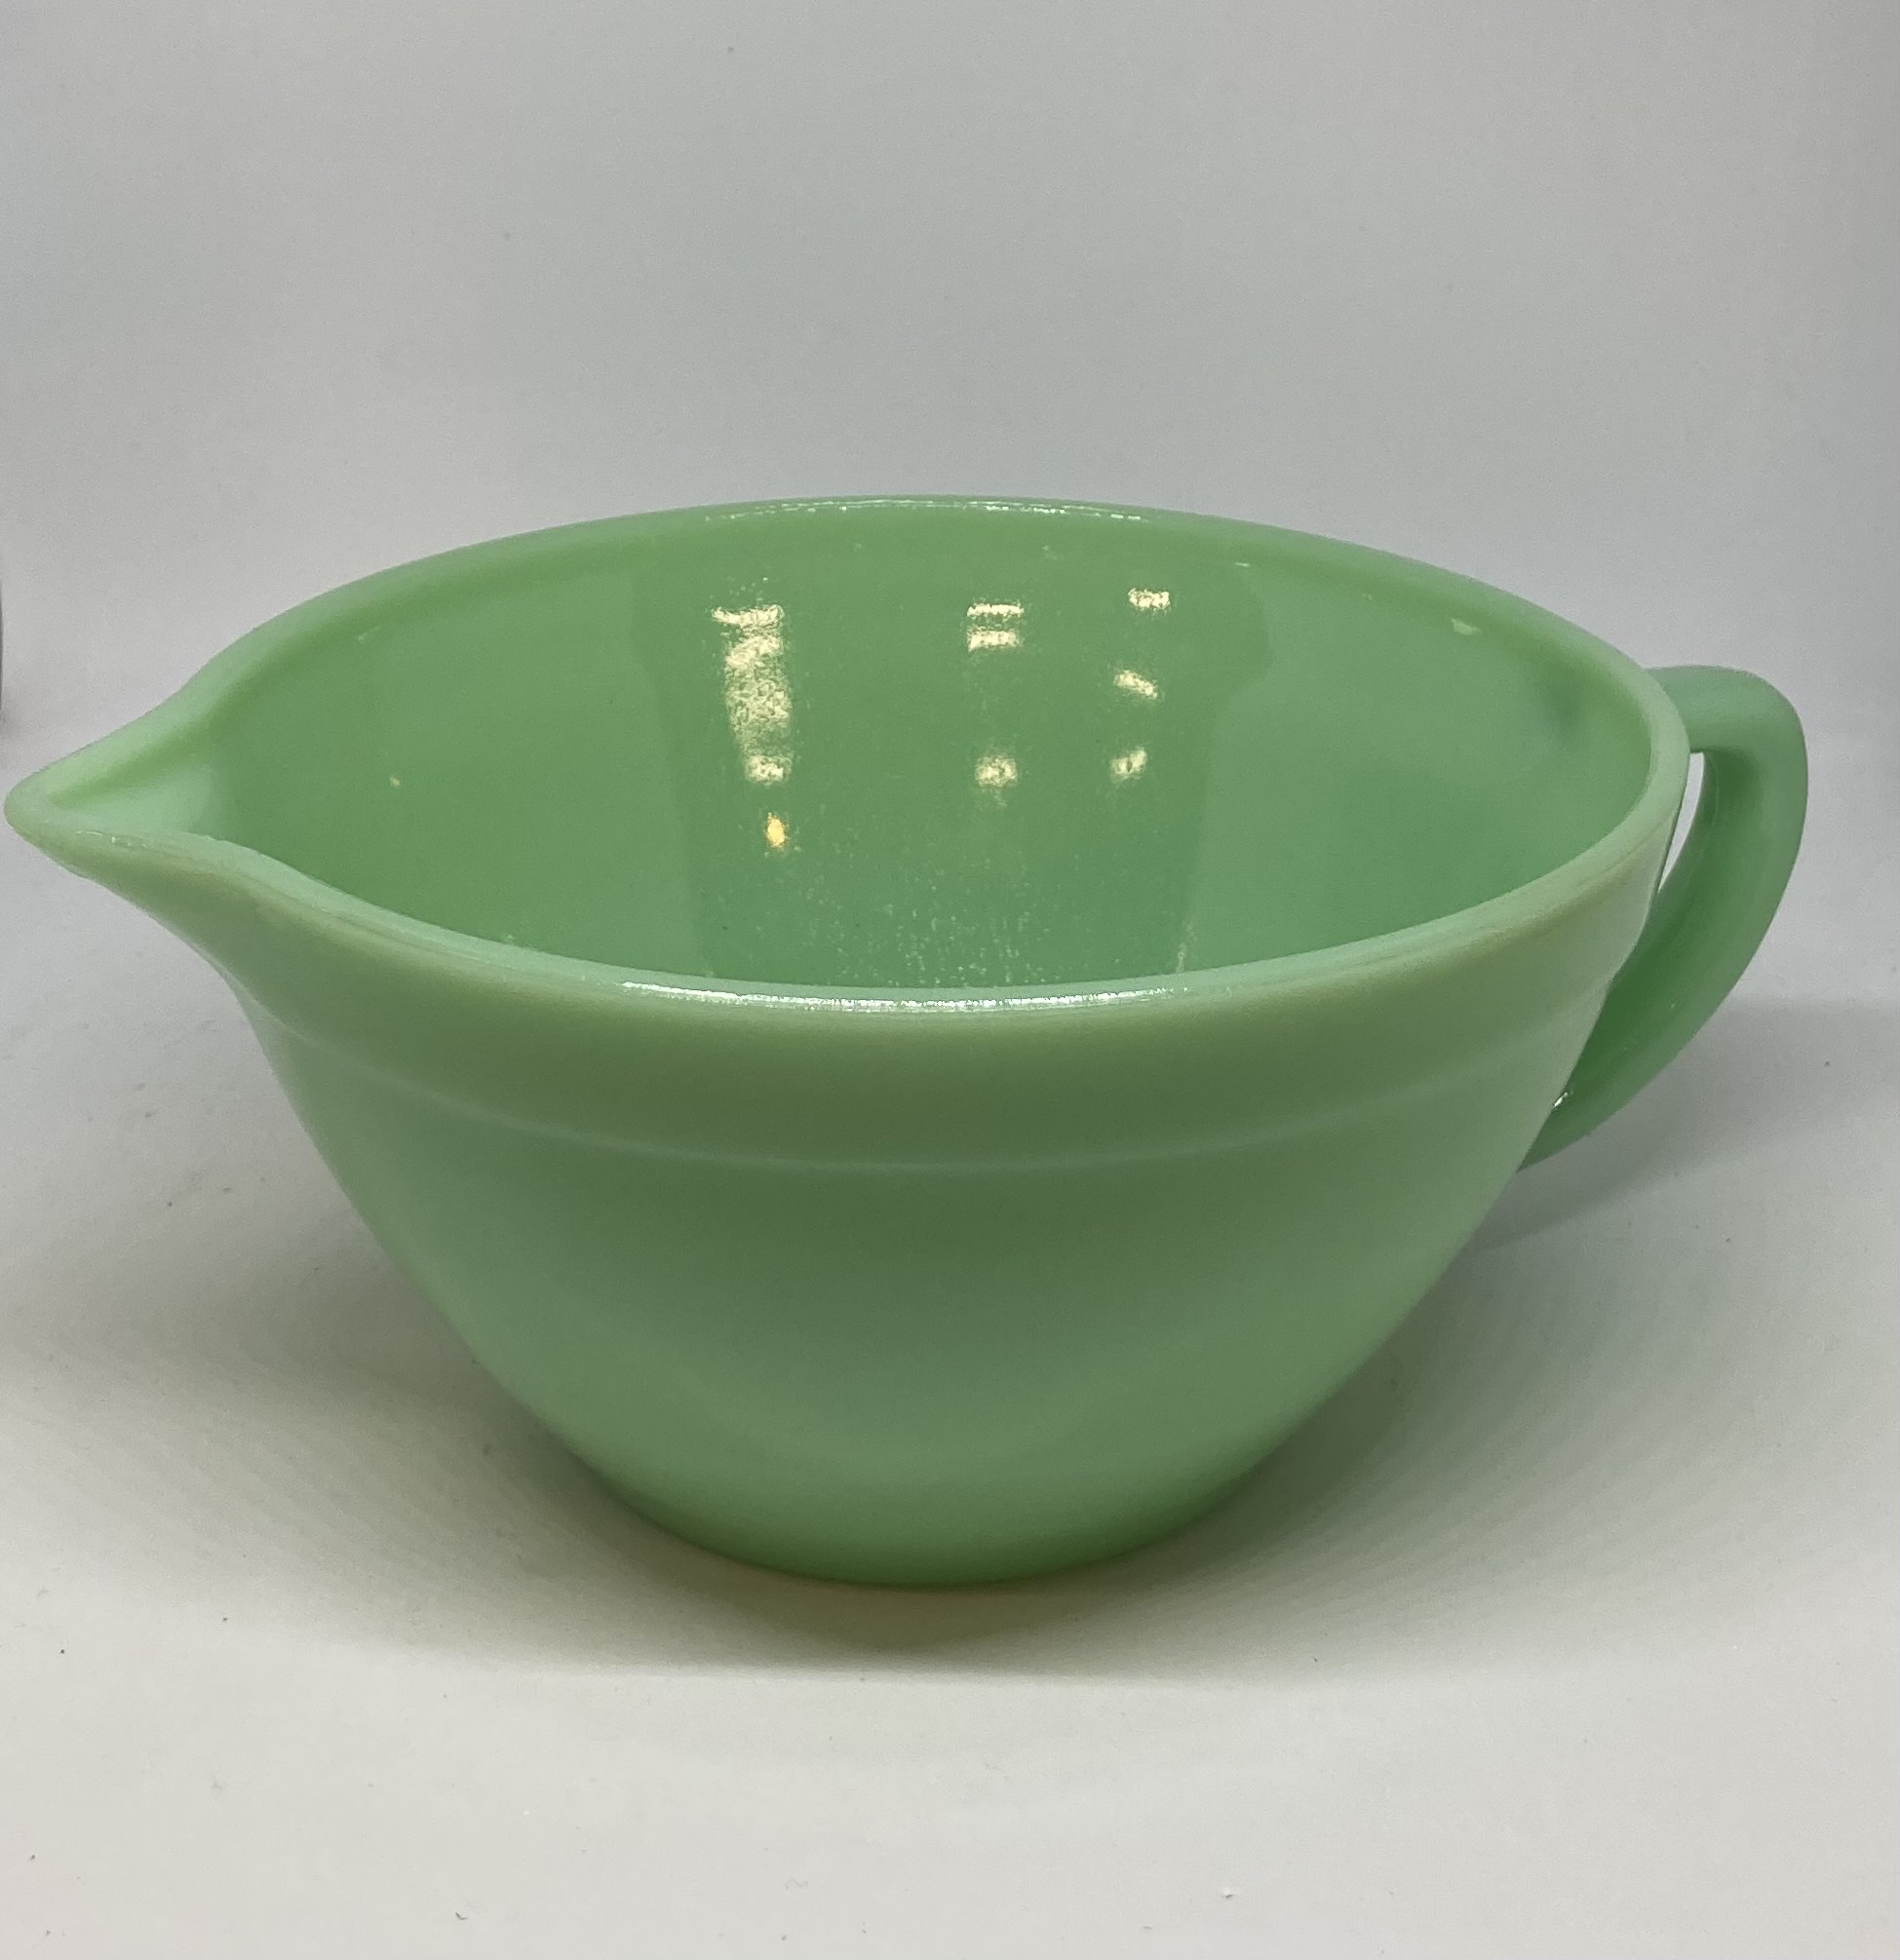 https://tallulahpoint.net/wp-content/uploads/2021/03/jadeite-mixing-bowl-1.jpeg